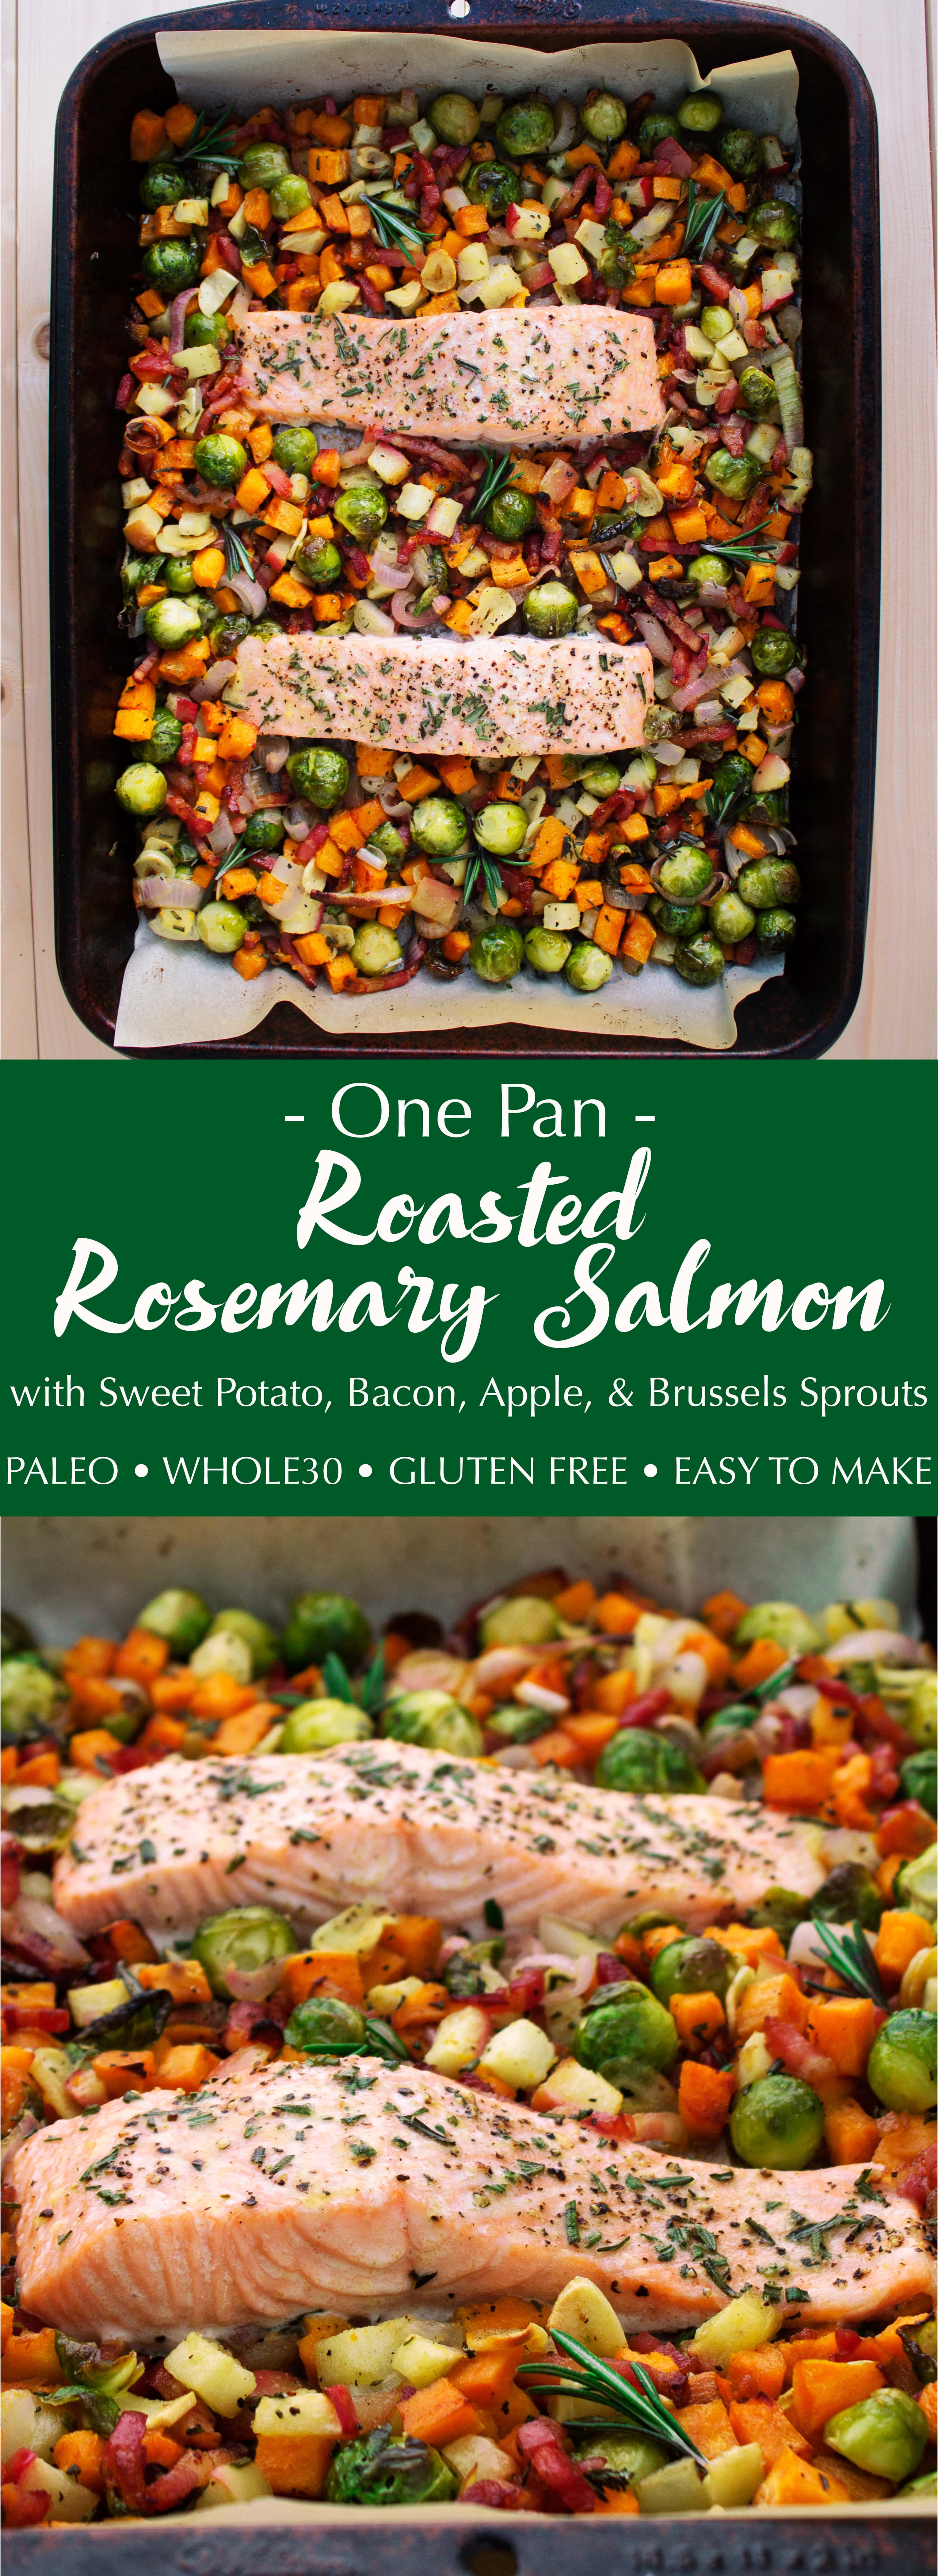 One Pan Salmon with Sweet Potato, Bacon, Apple, & Brussels Sprouts | Kit's Coastal | #kitscoastal #coastalpaleo #paleo #glutenfree #dairyfree #salmon #onepan #sheetpan